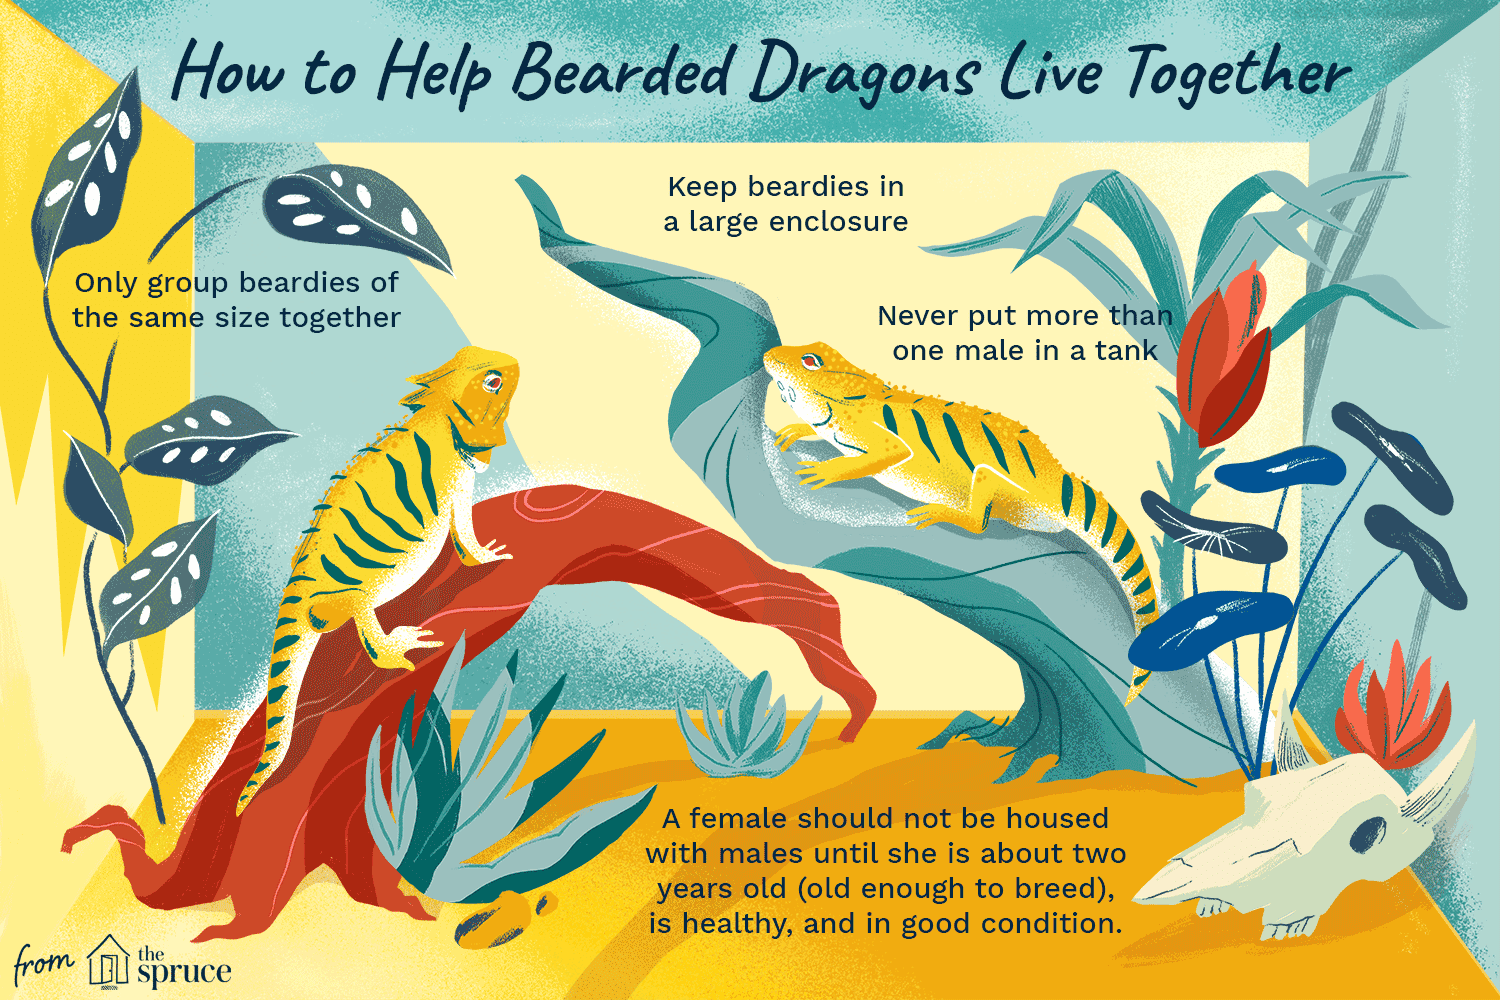 Os dragões barbudos podem viver juntos?